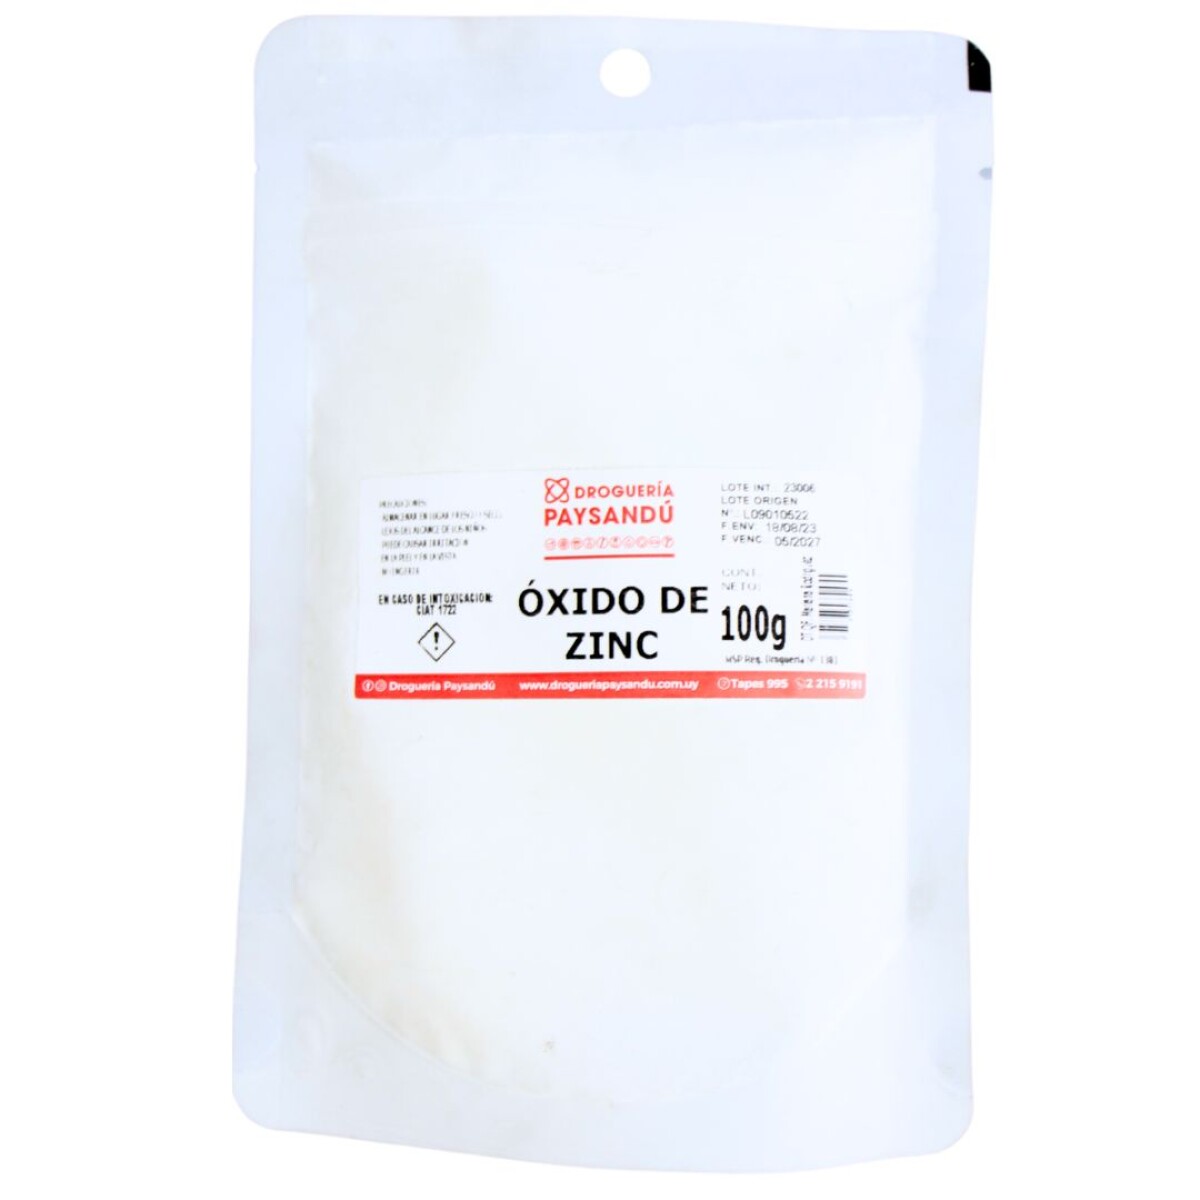 Oxido de zinc x 100g 